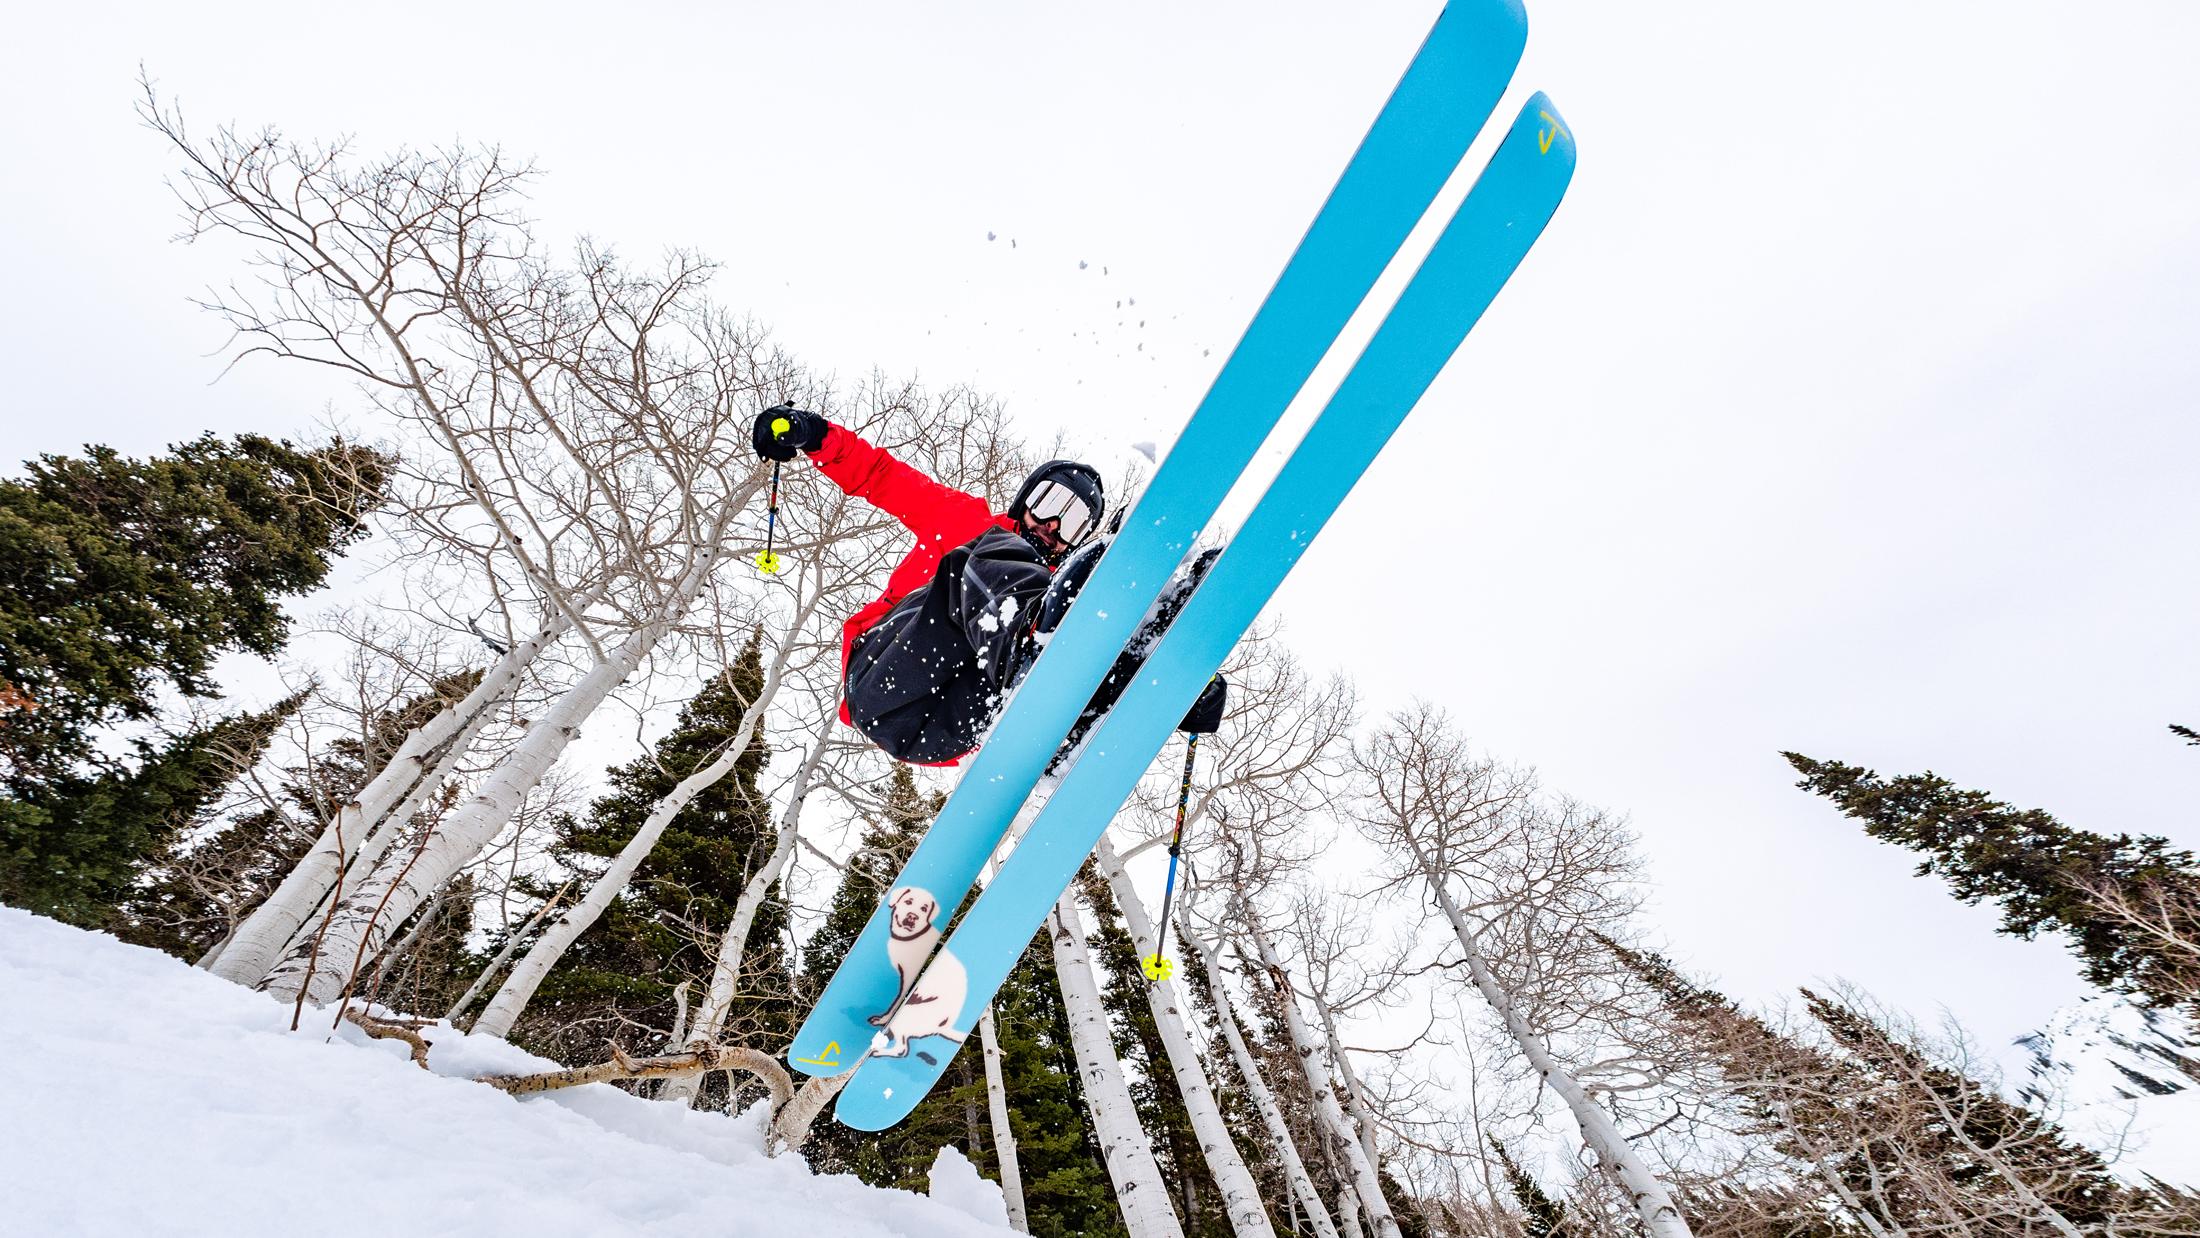 The Allplay "DEUCE" Ryan Duggan x J Collab Limited Edition Ski Shredding Image